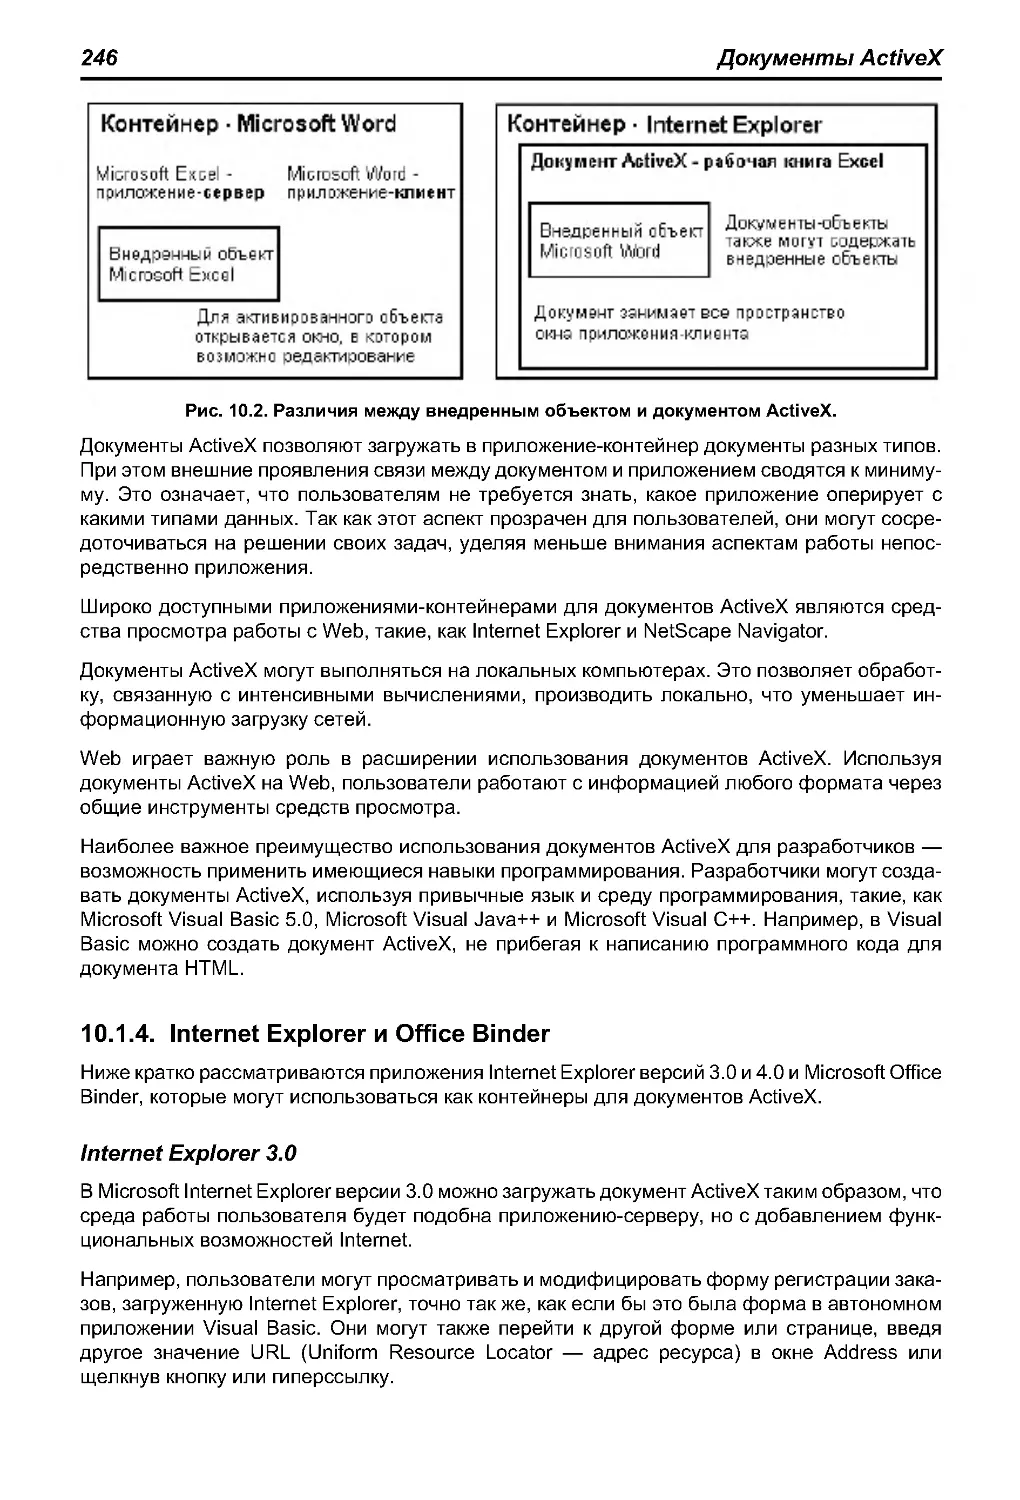 10.1.4. Internet Explorer и Office Binder